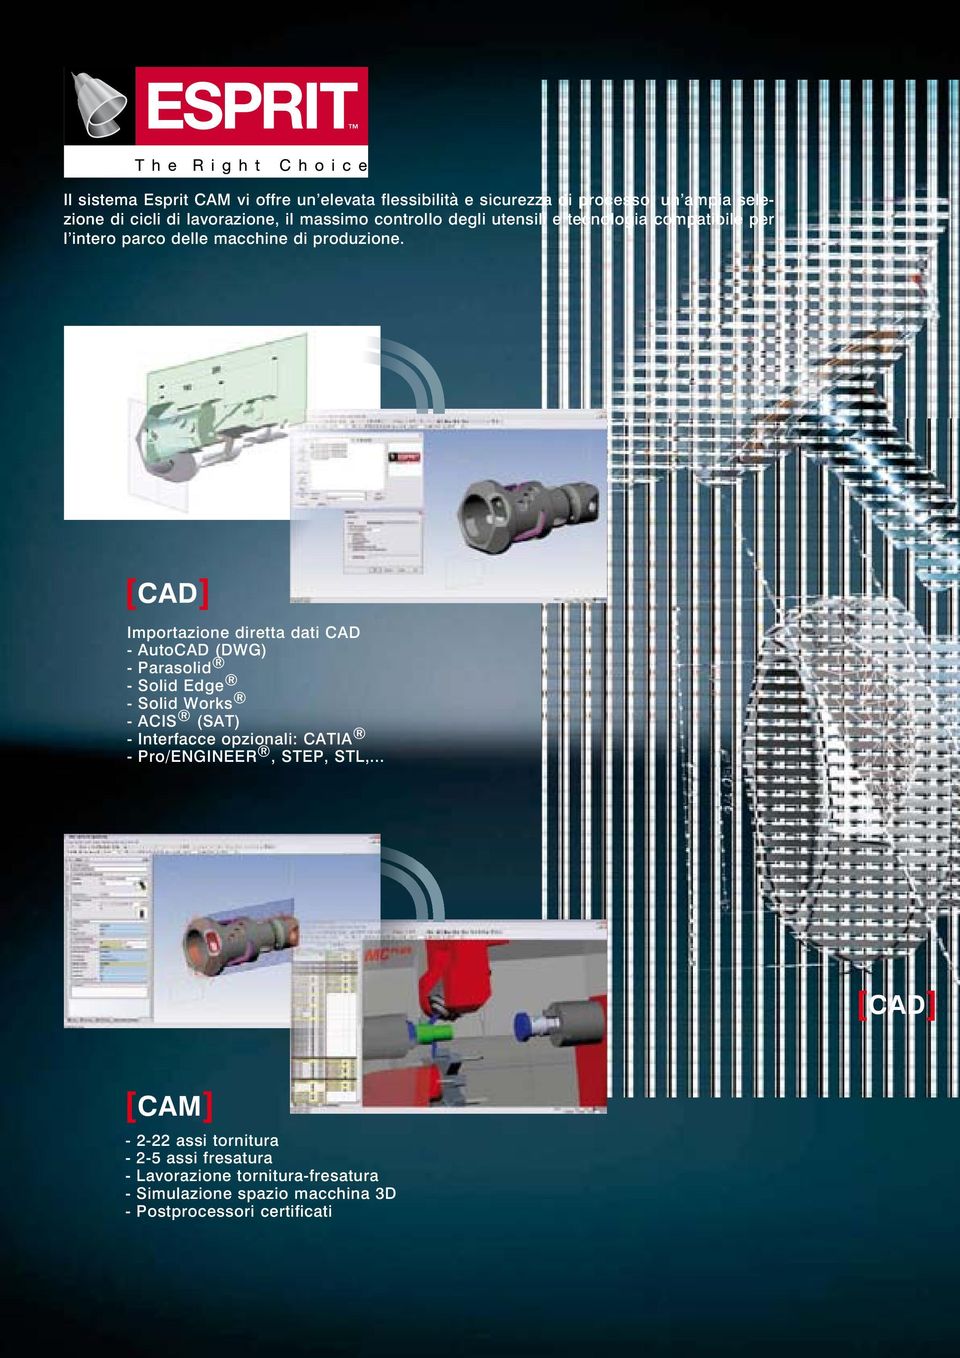 [CAD] Importazione diretta dati CAD - AutoCAD (DWG) - Parasolid - Solid Edge - Solid Works - ACIS (SAT) - Interfacce opzionali: CATIA -